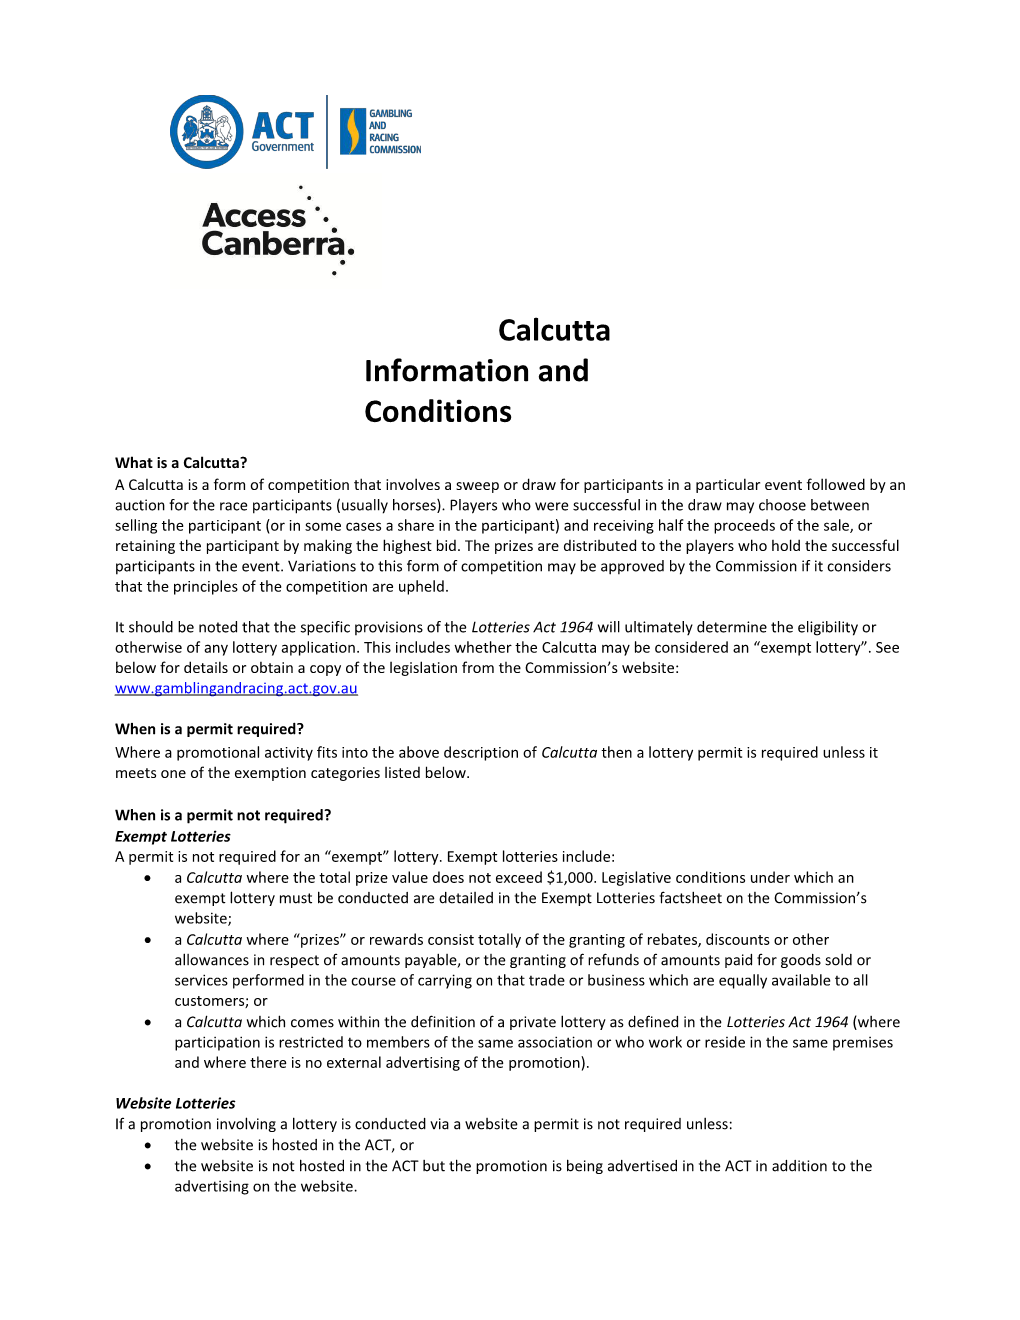 Calcutta Information and Conditions